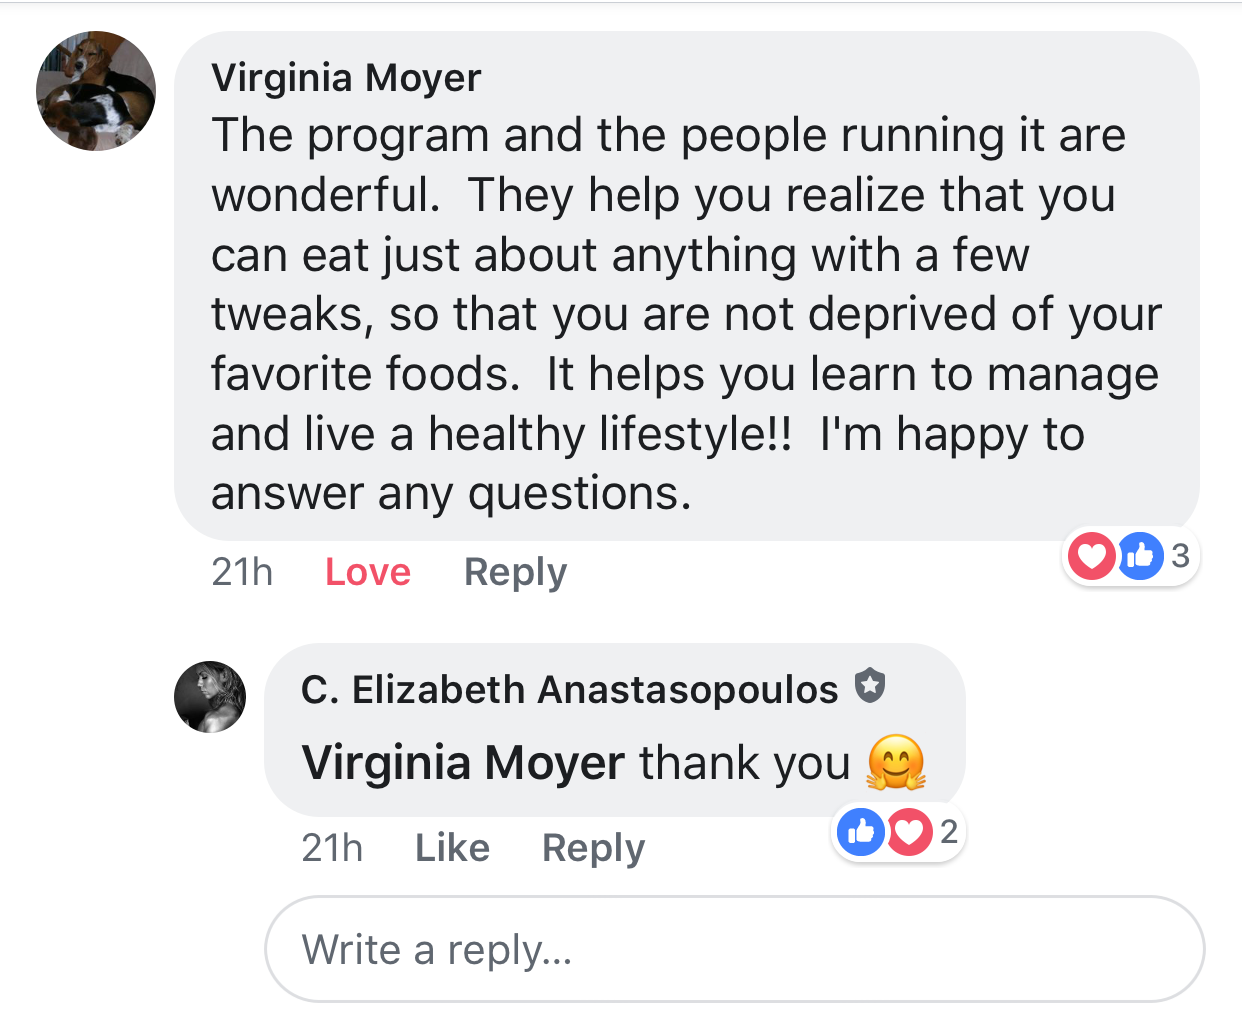 Virginia Moyer